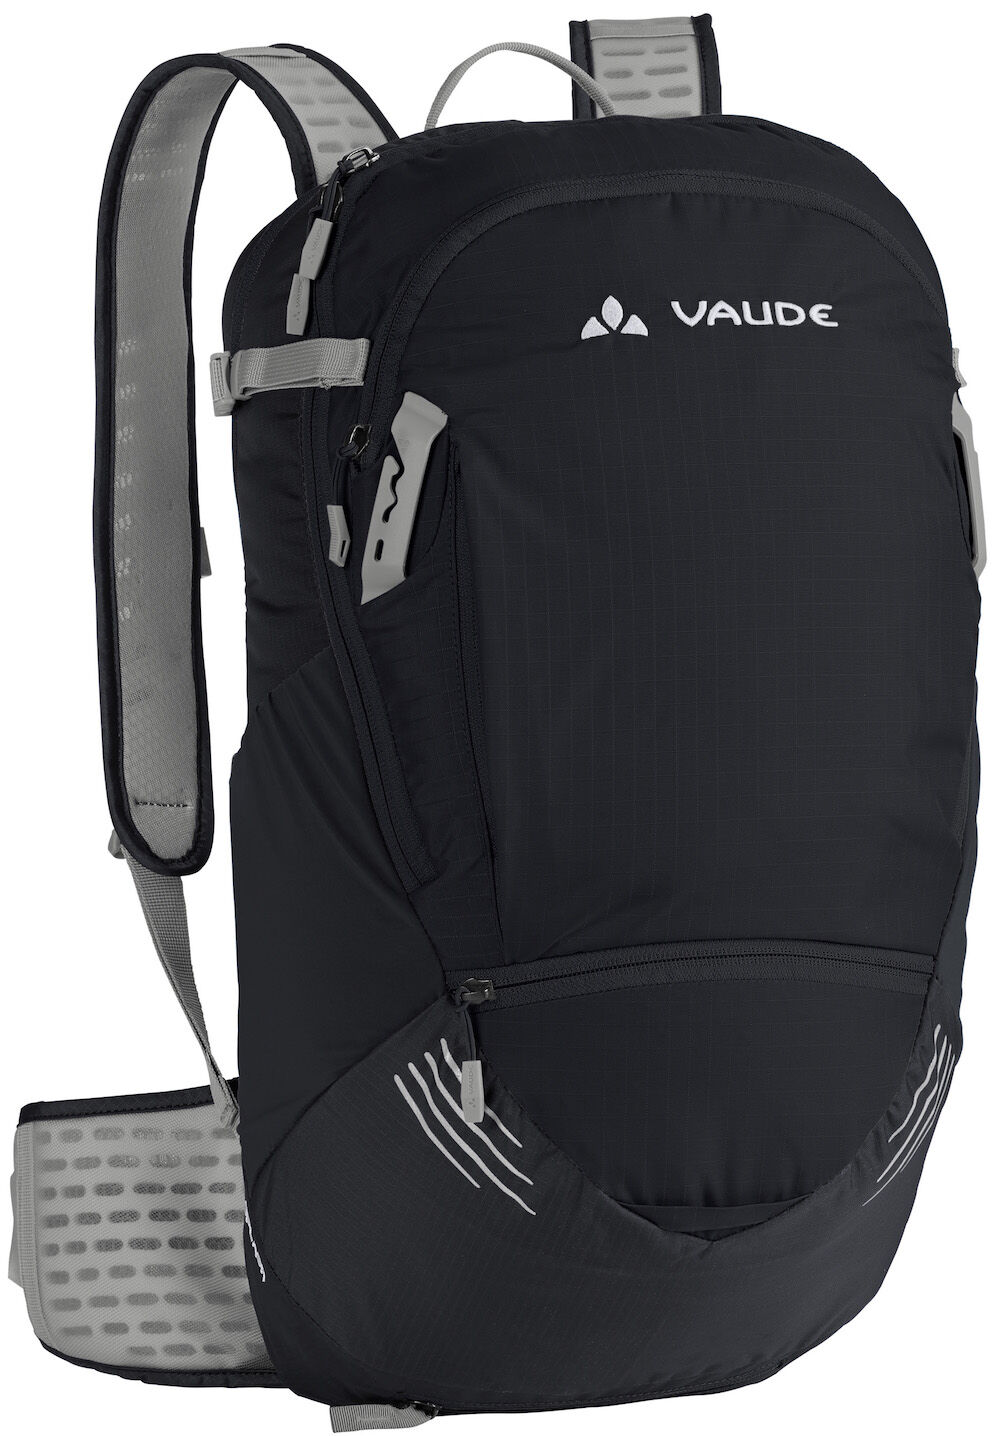 Vaude - Hyper 14 + 3 - Backpack